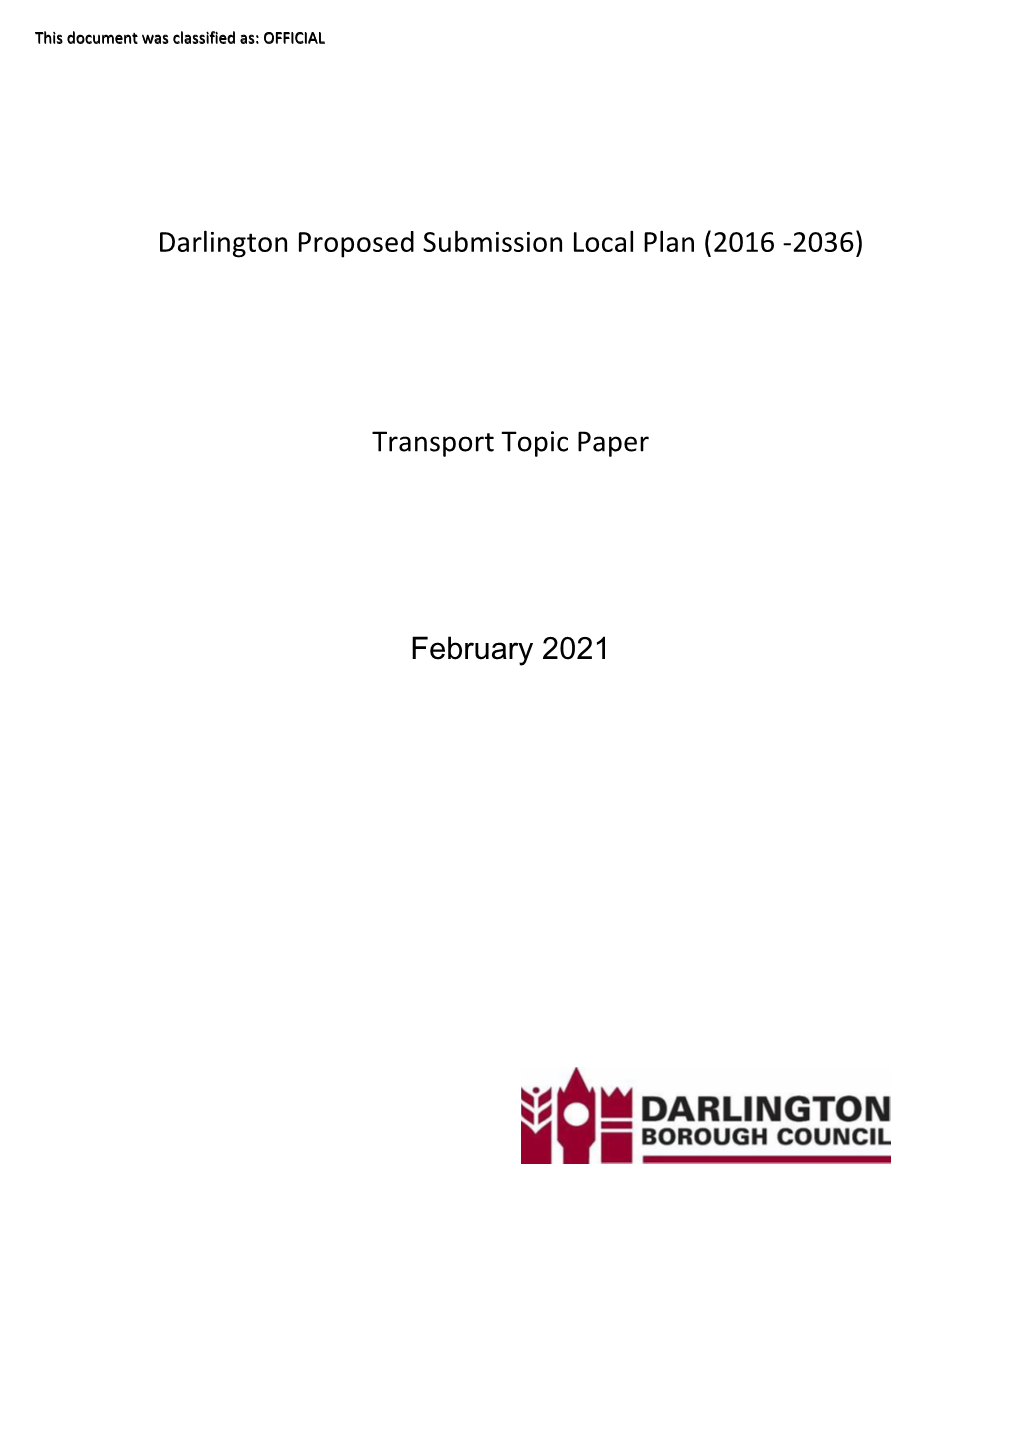 Transport Topic Paper